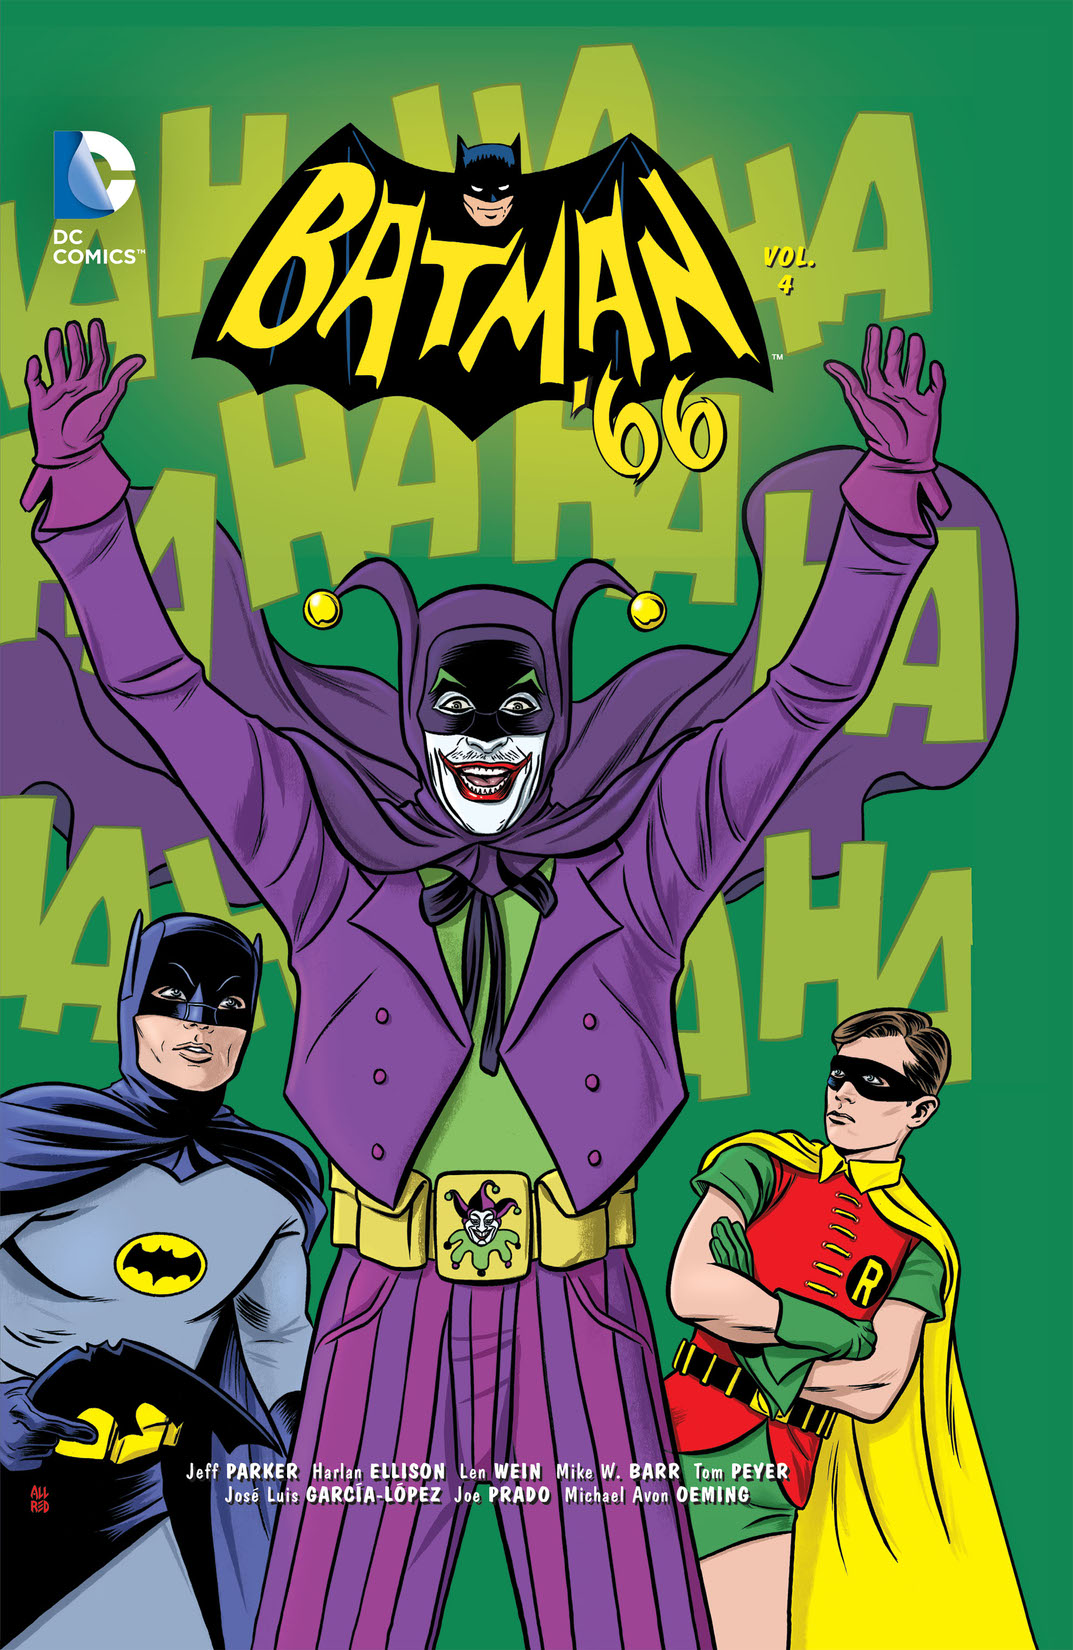 Batman '66 Vol. 4 preview images